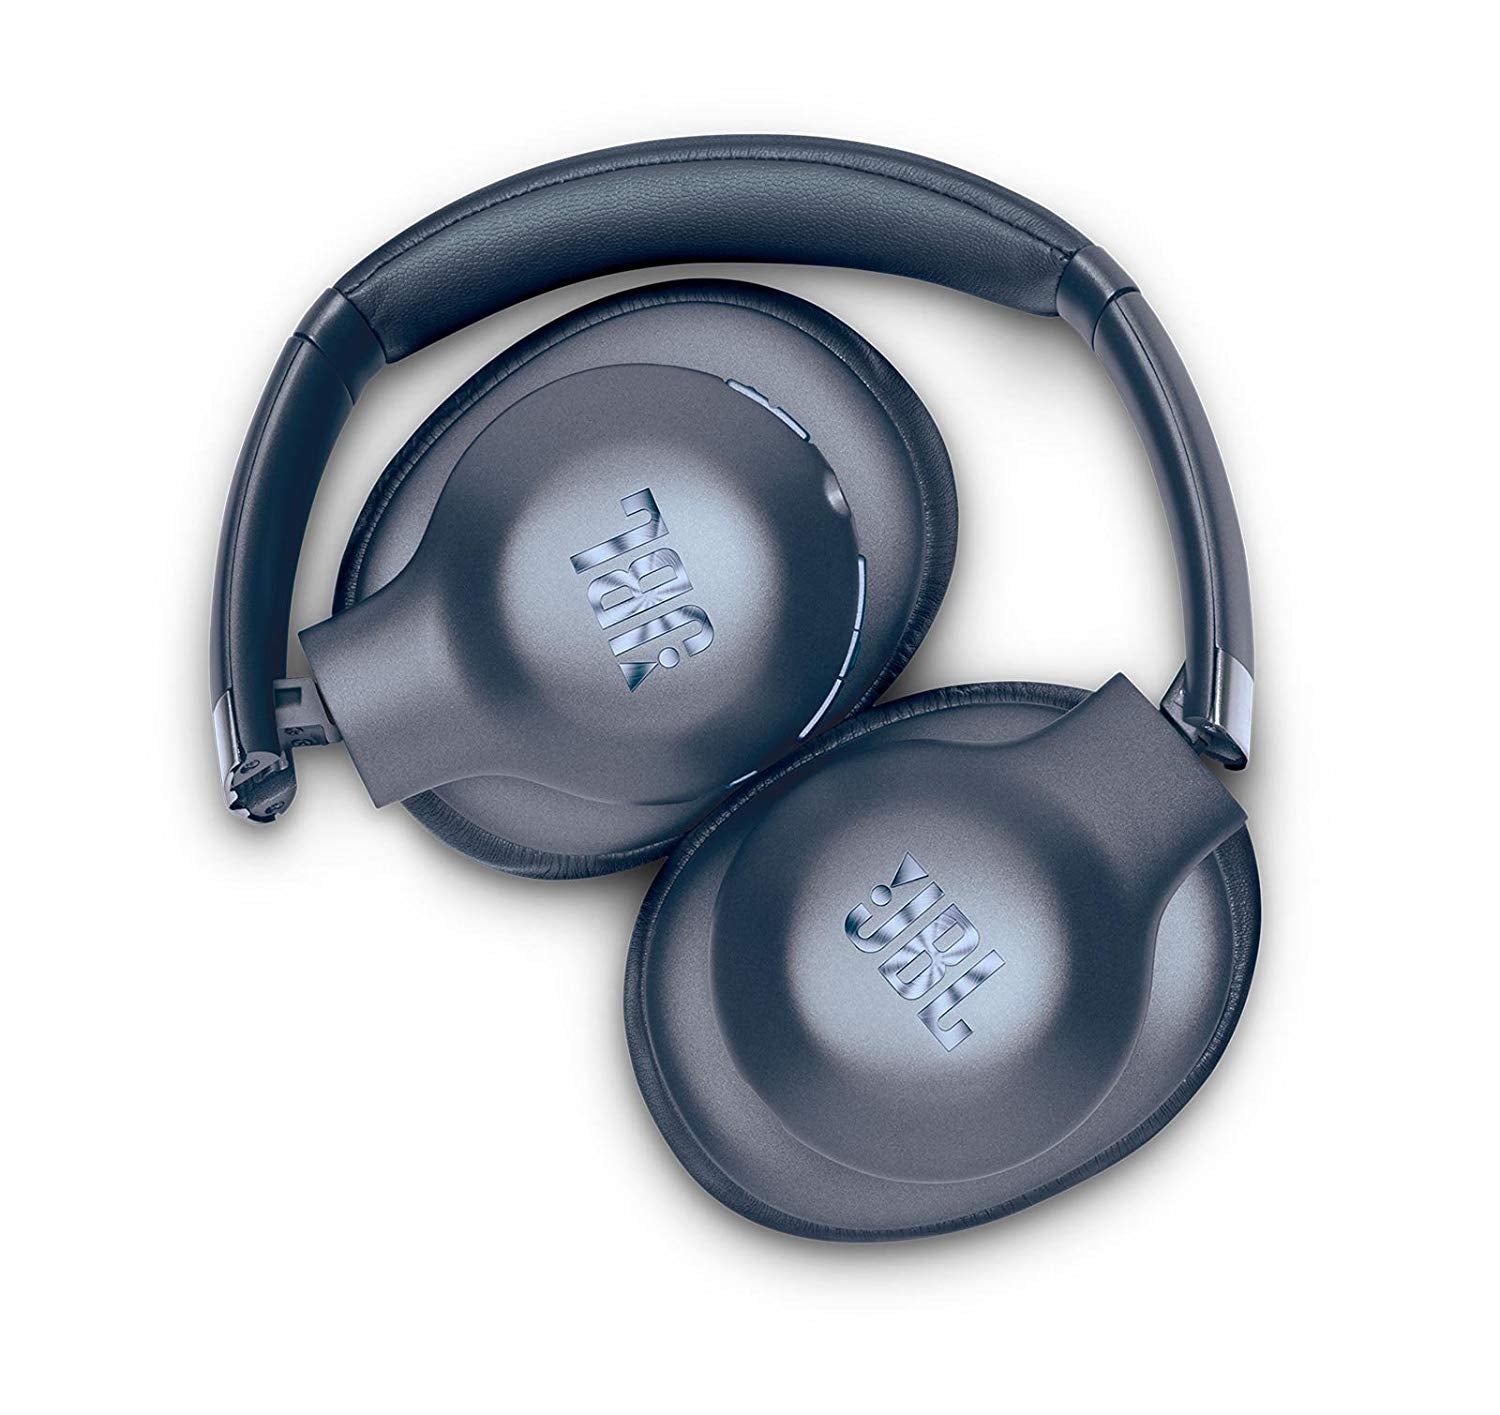 JBL JBLV750NXTBLU-Z Everest Elite 750 Over-Ear Wireless Bluetooth Headphones, Blue  Certified Refurbished